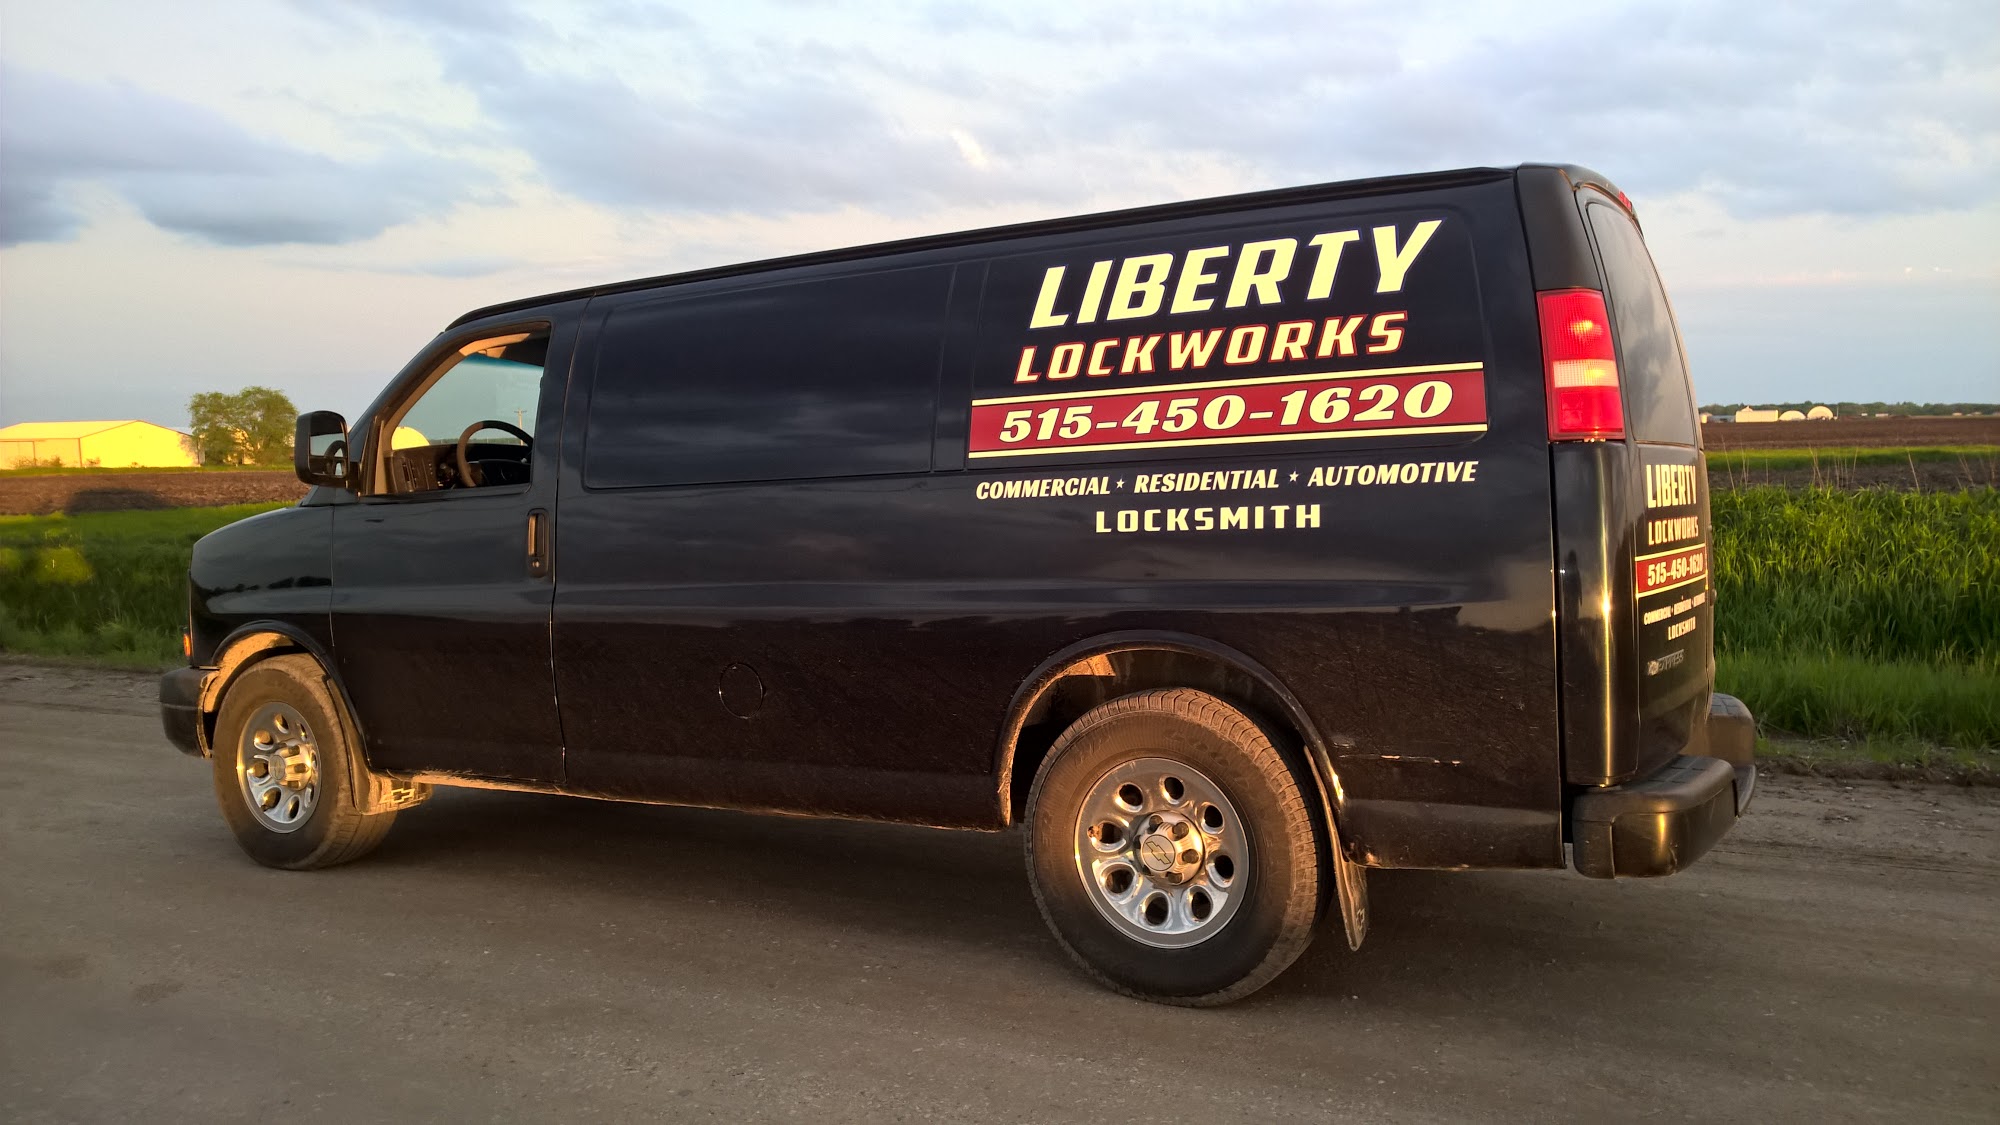 Liberty Lockworks